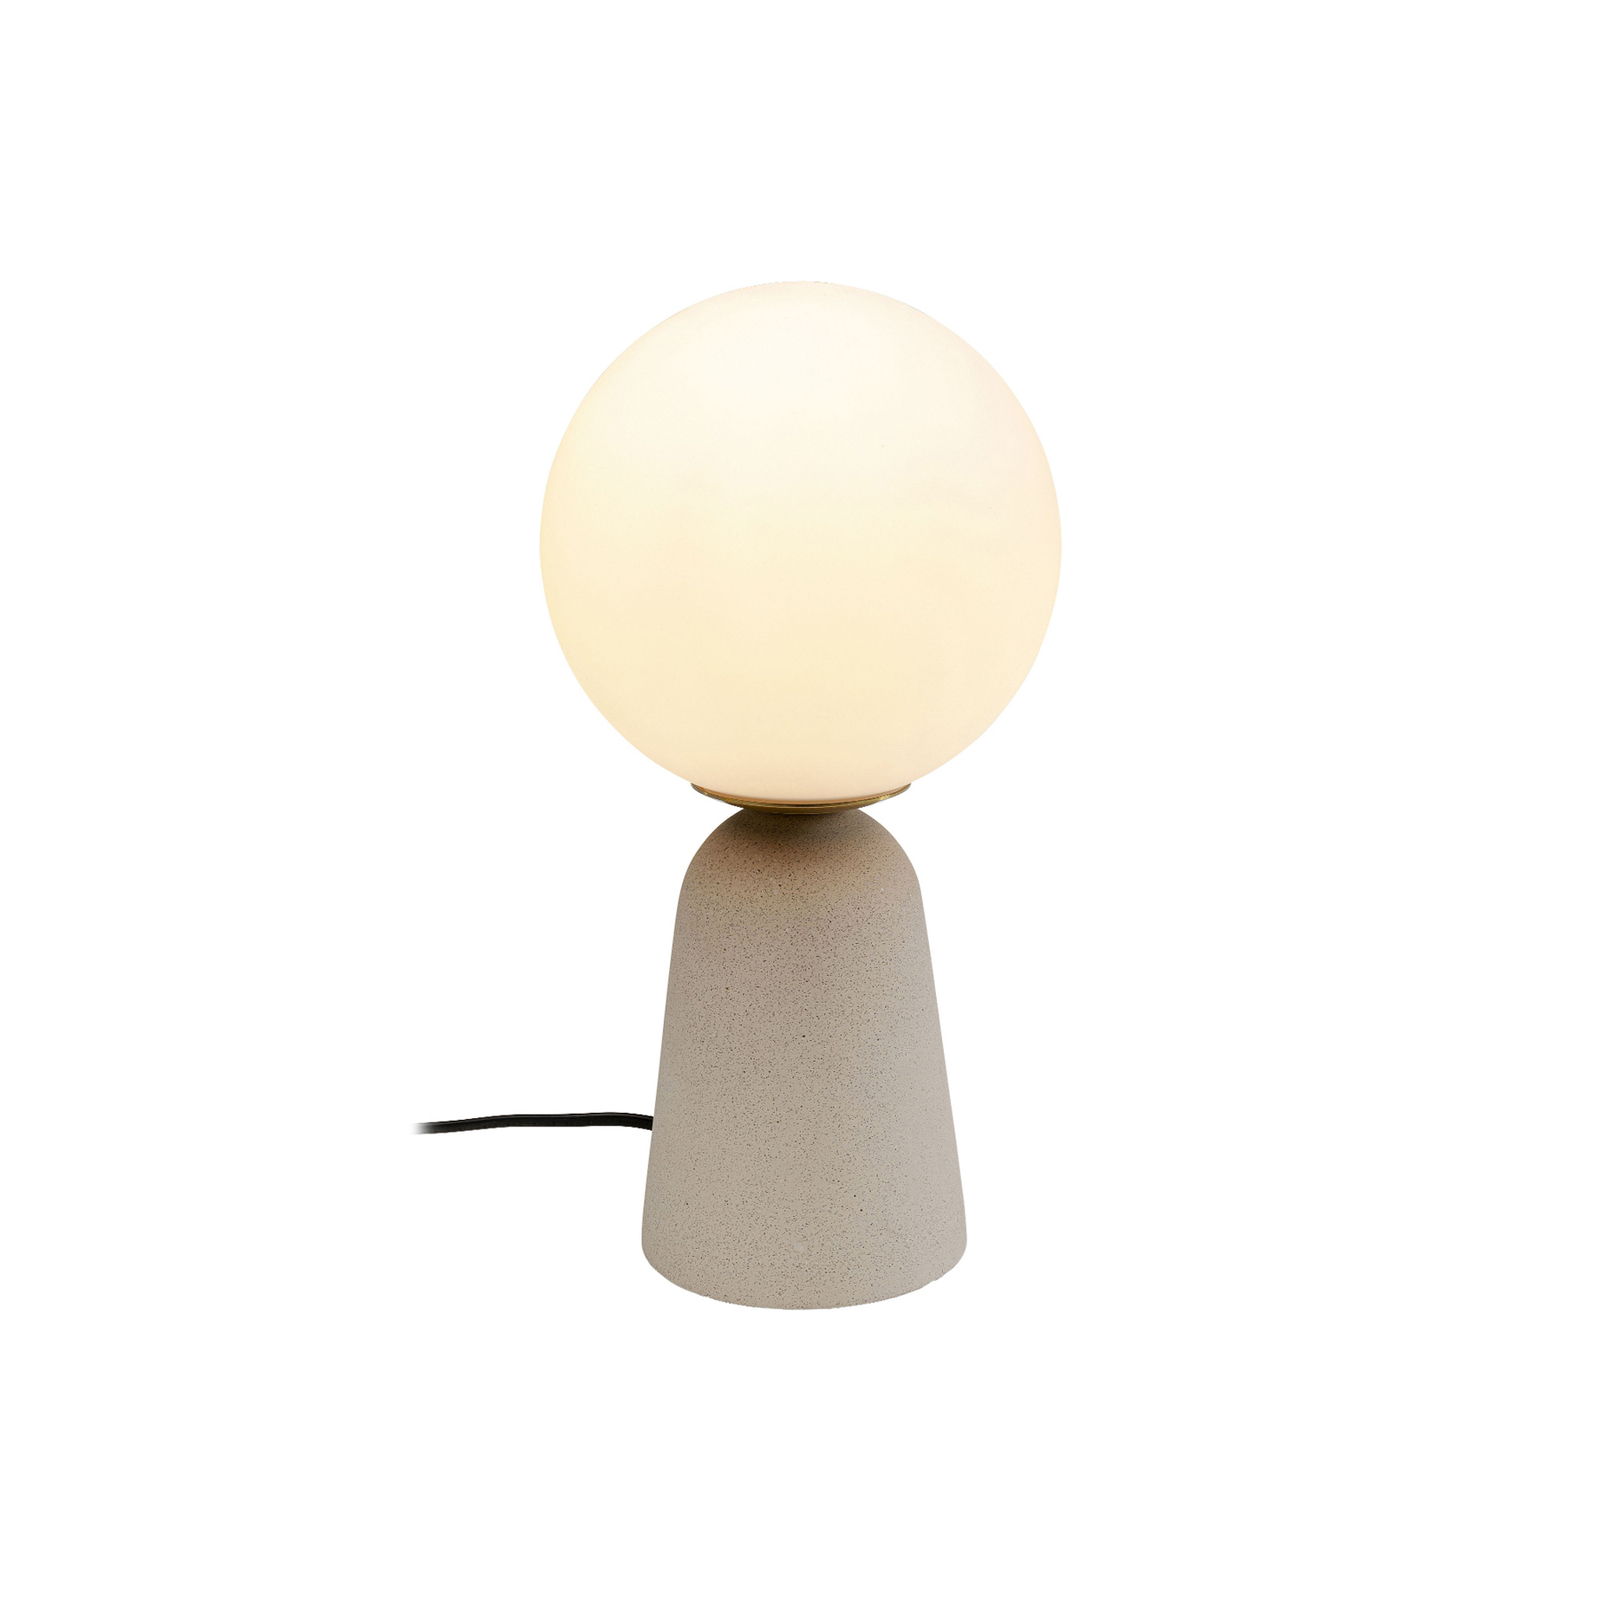 KARE bordslampa Bollie, betongfot beige, opalglas höjd 31 cm